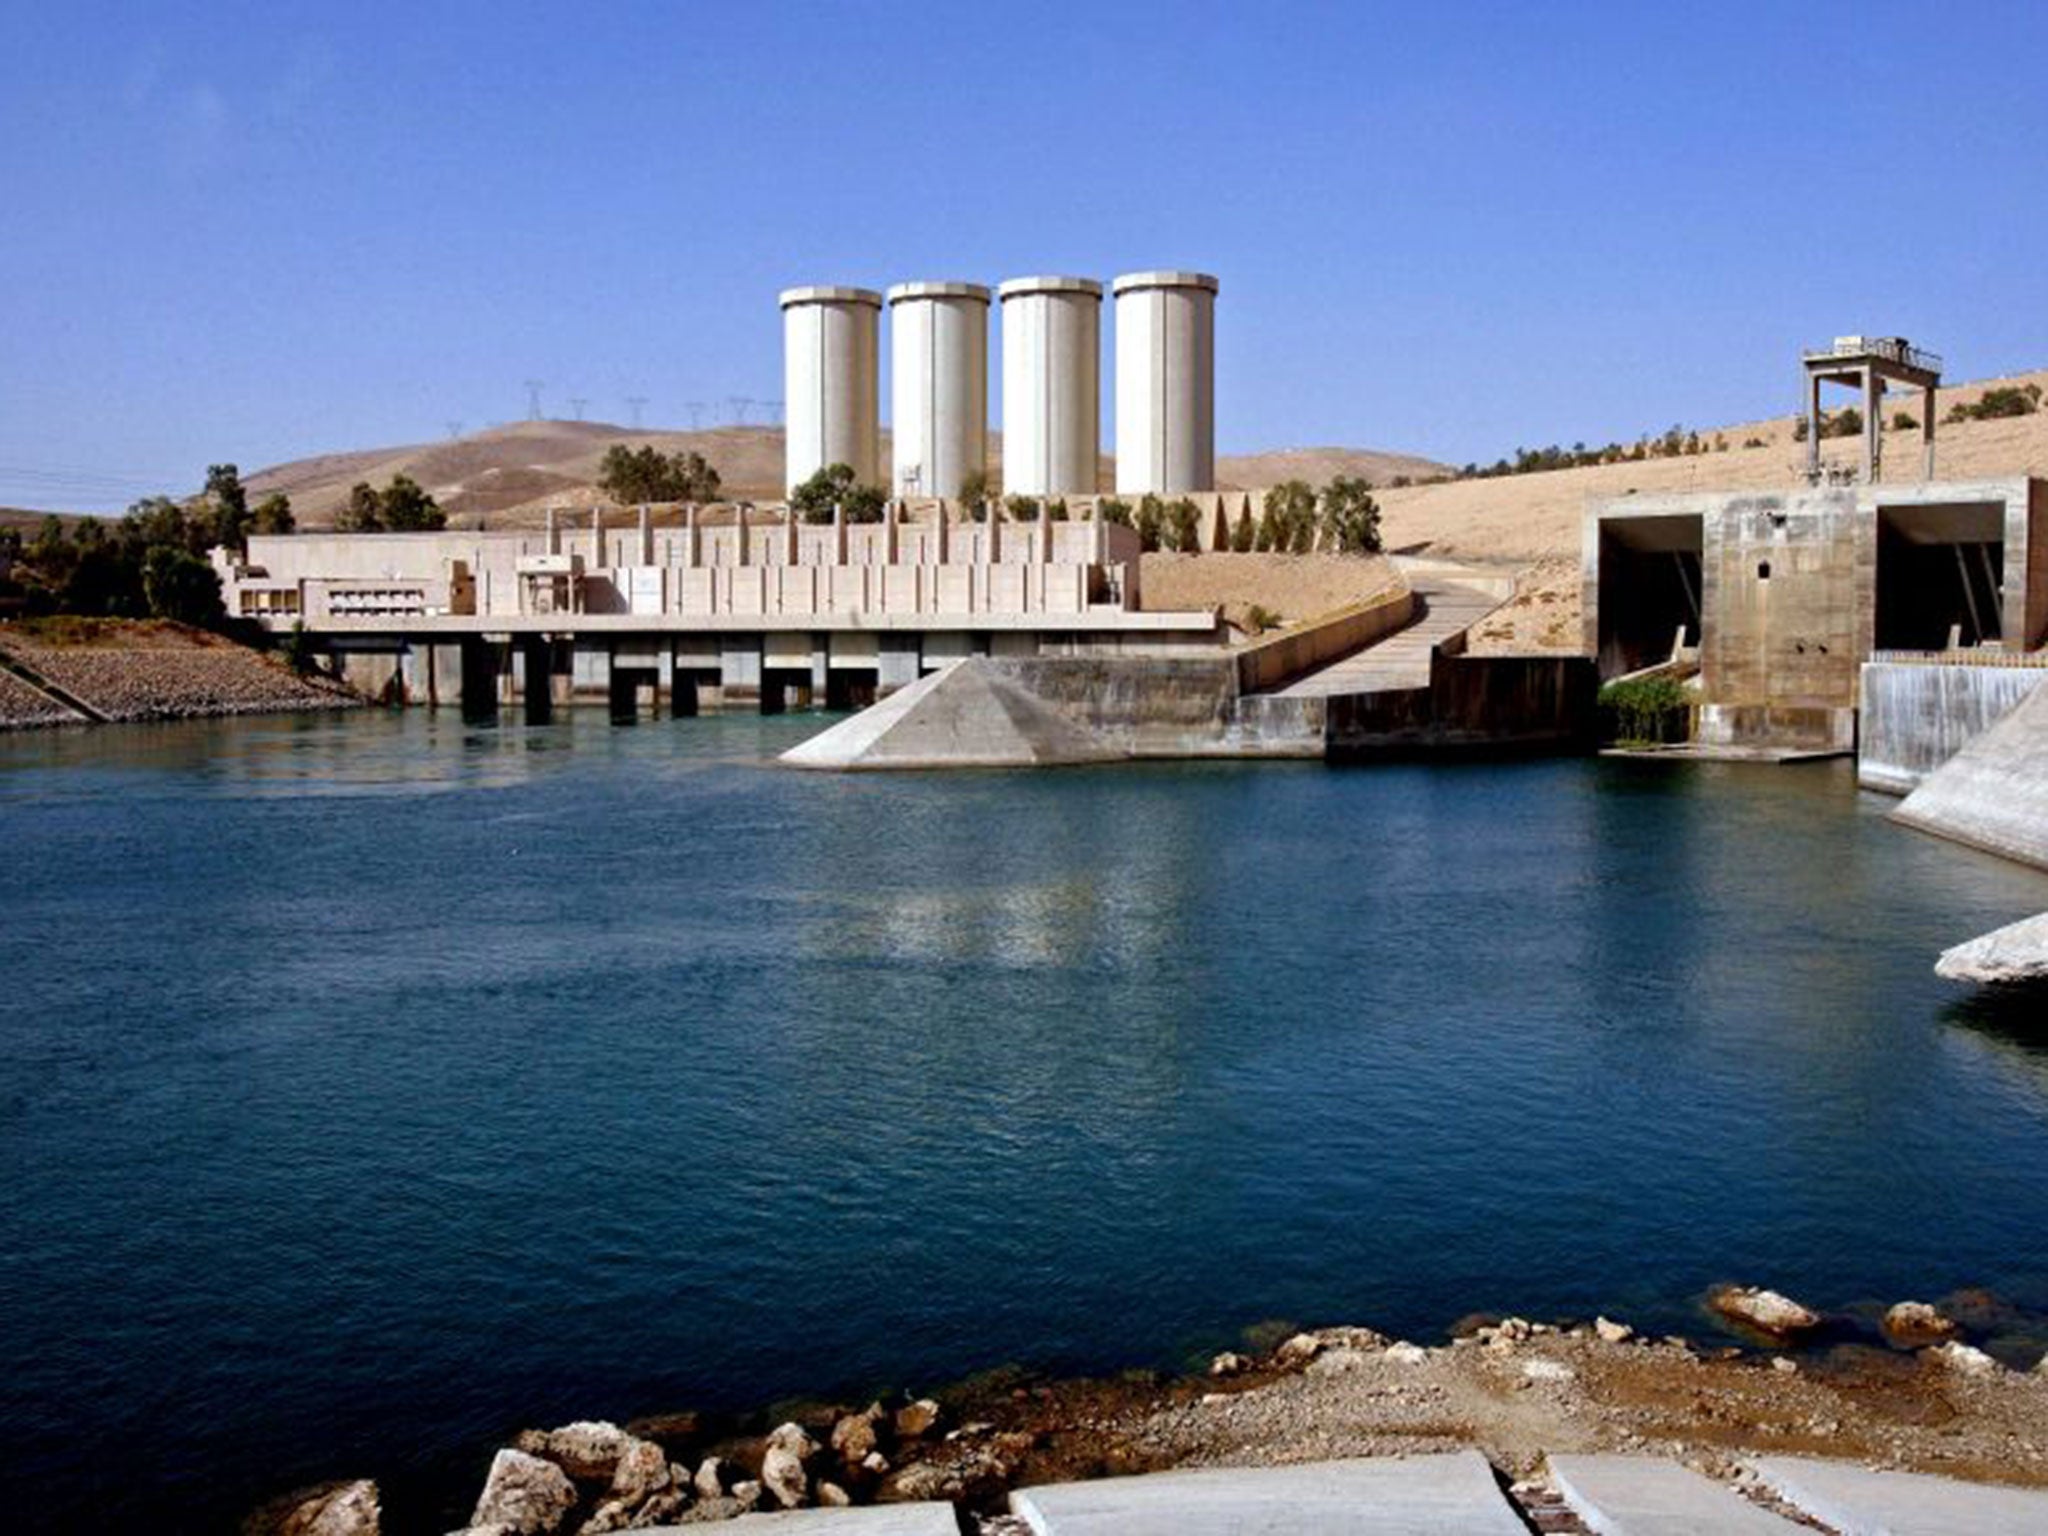 The Mosul dam lies 225 miles northwest of Baghdad